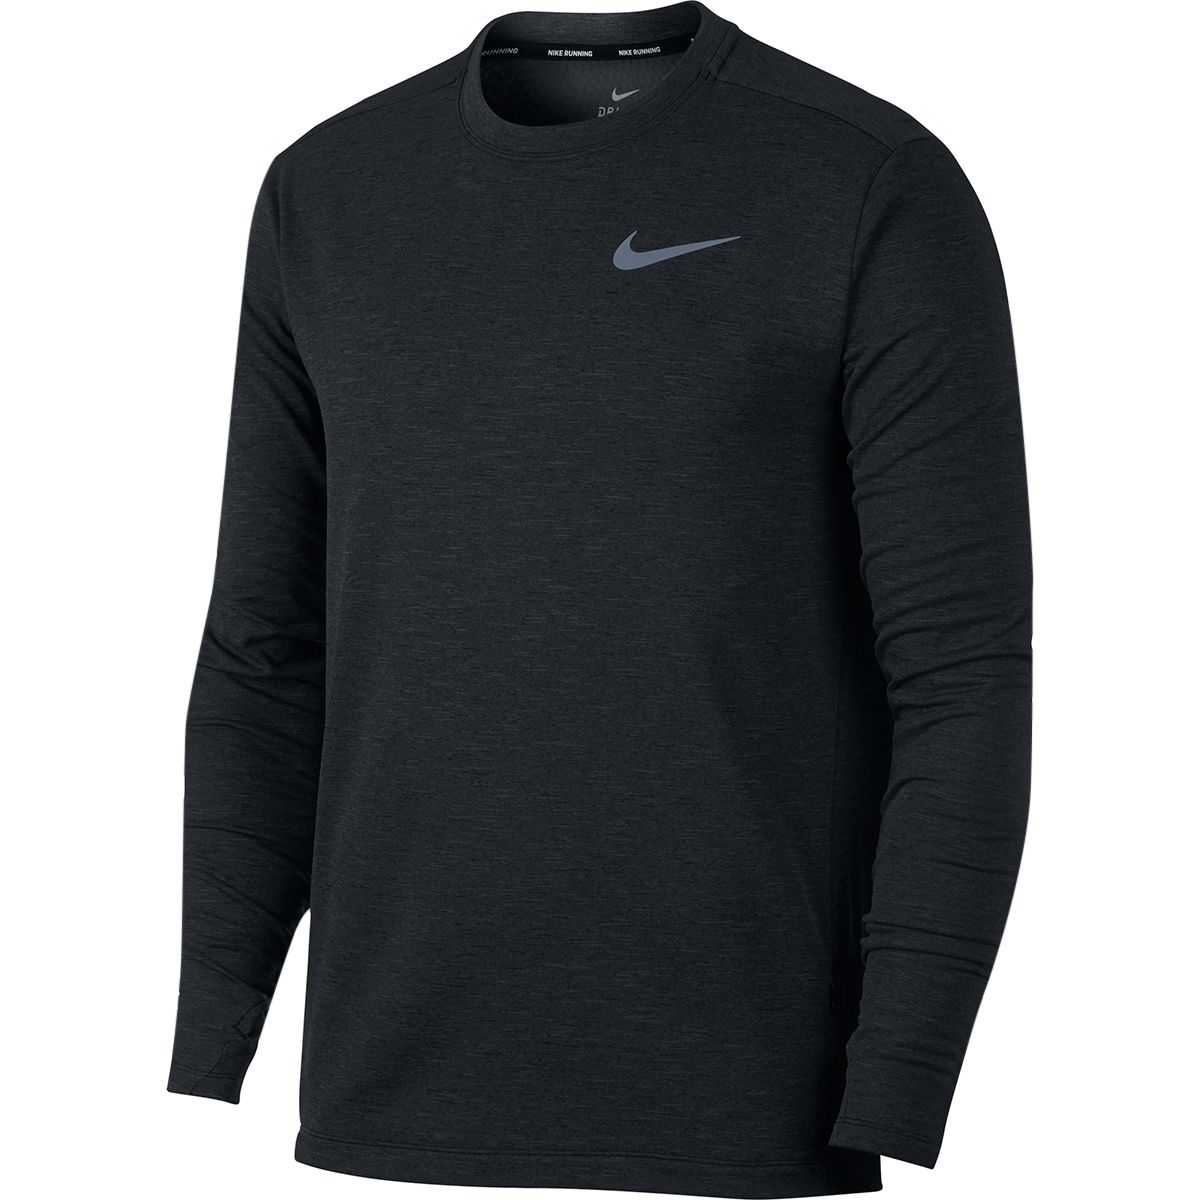 Nike Therma Sphere Element Long-Sleeve 2.0 Crew Top - Men's - Clothing